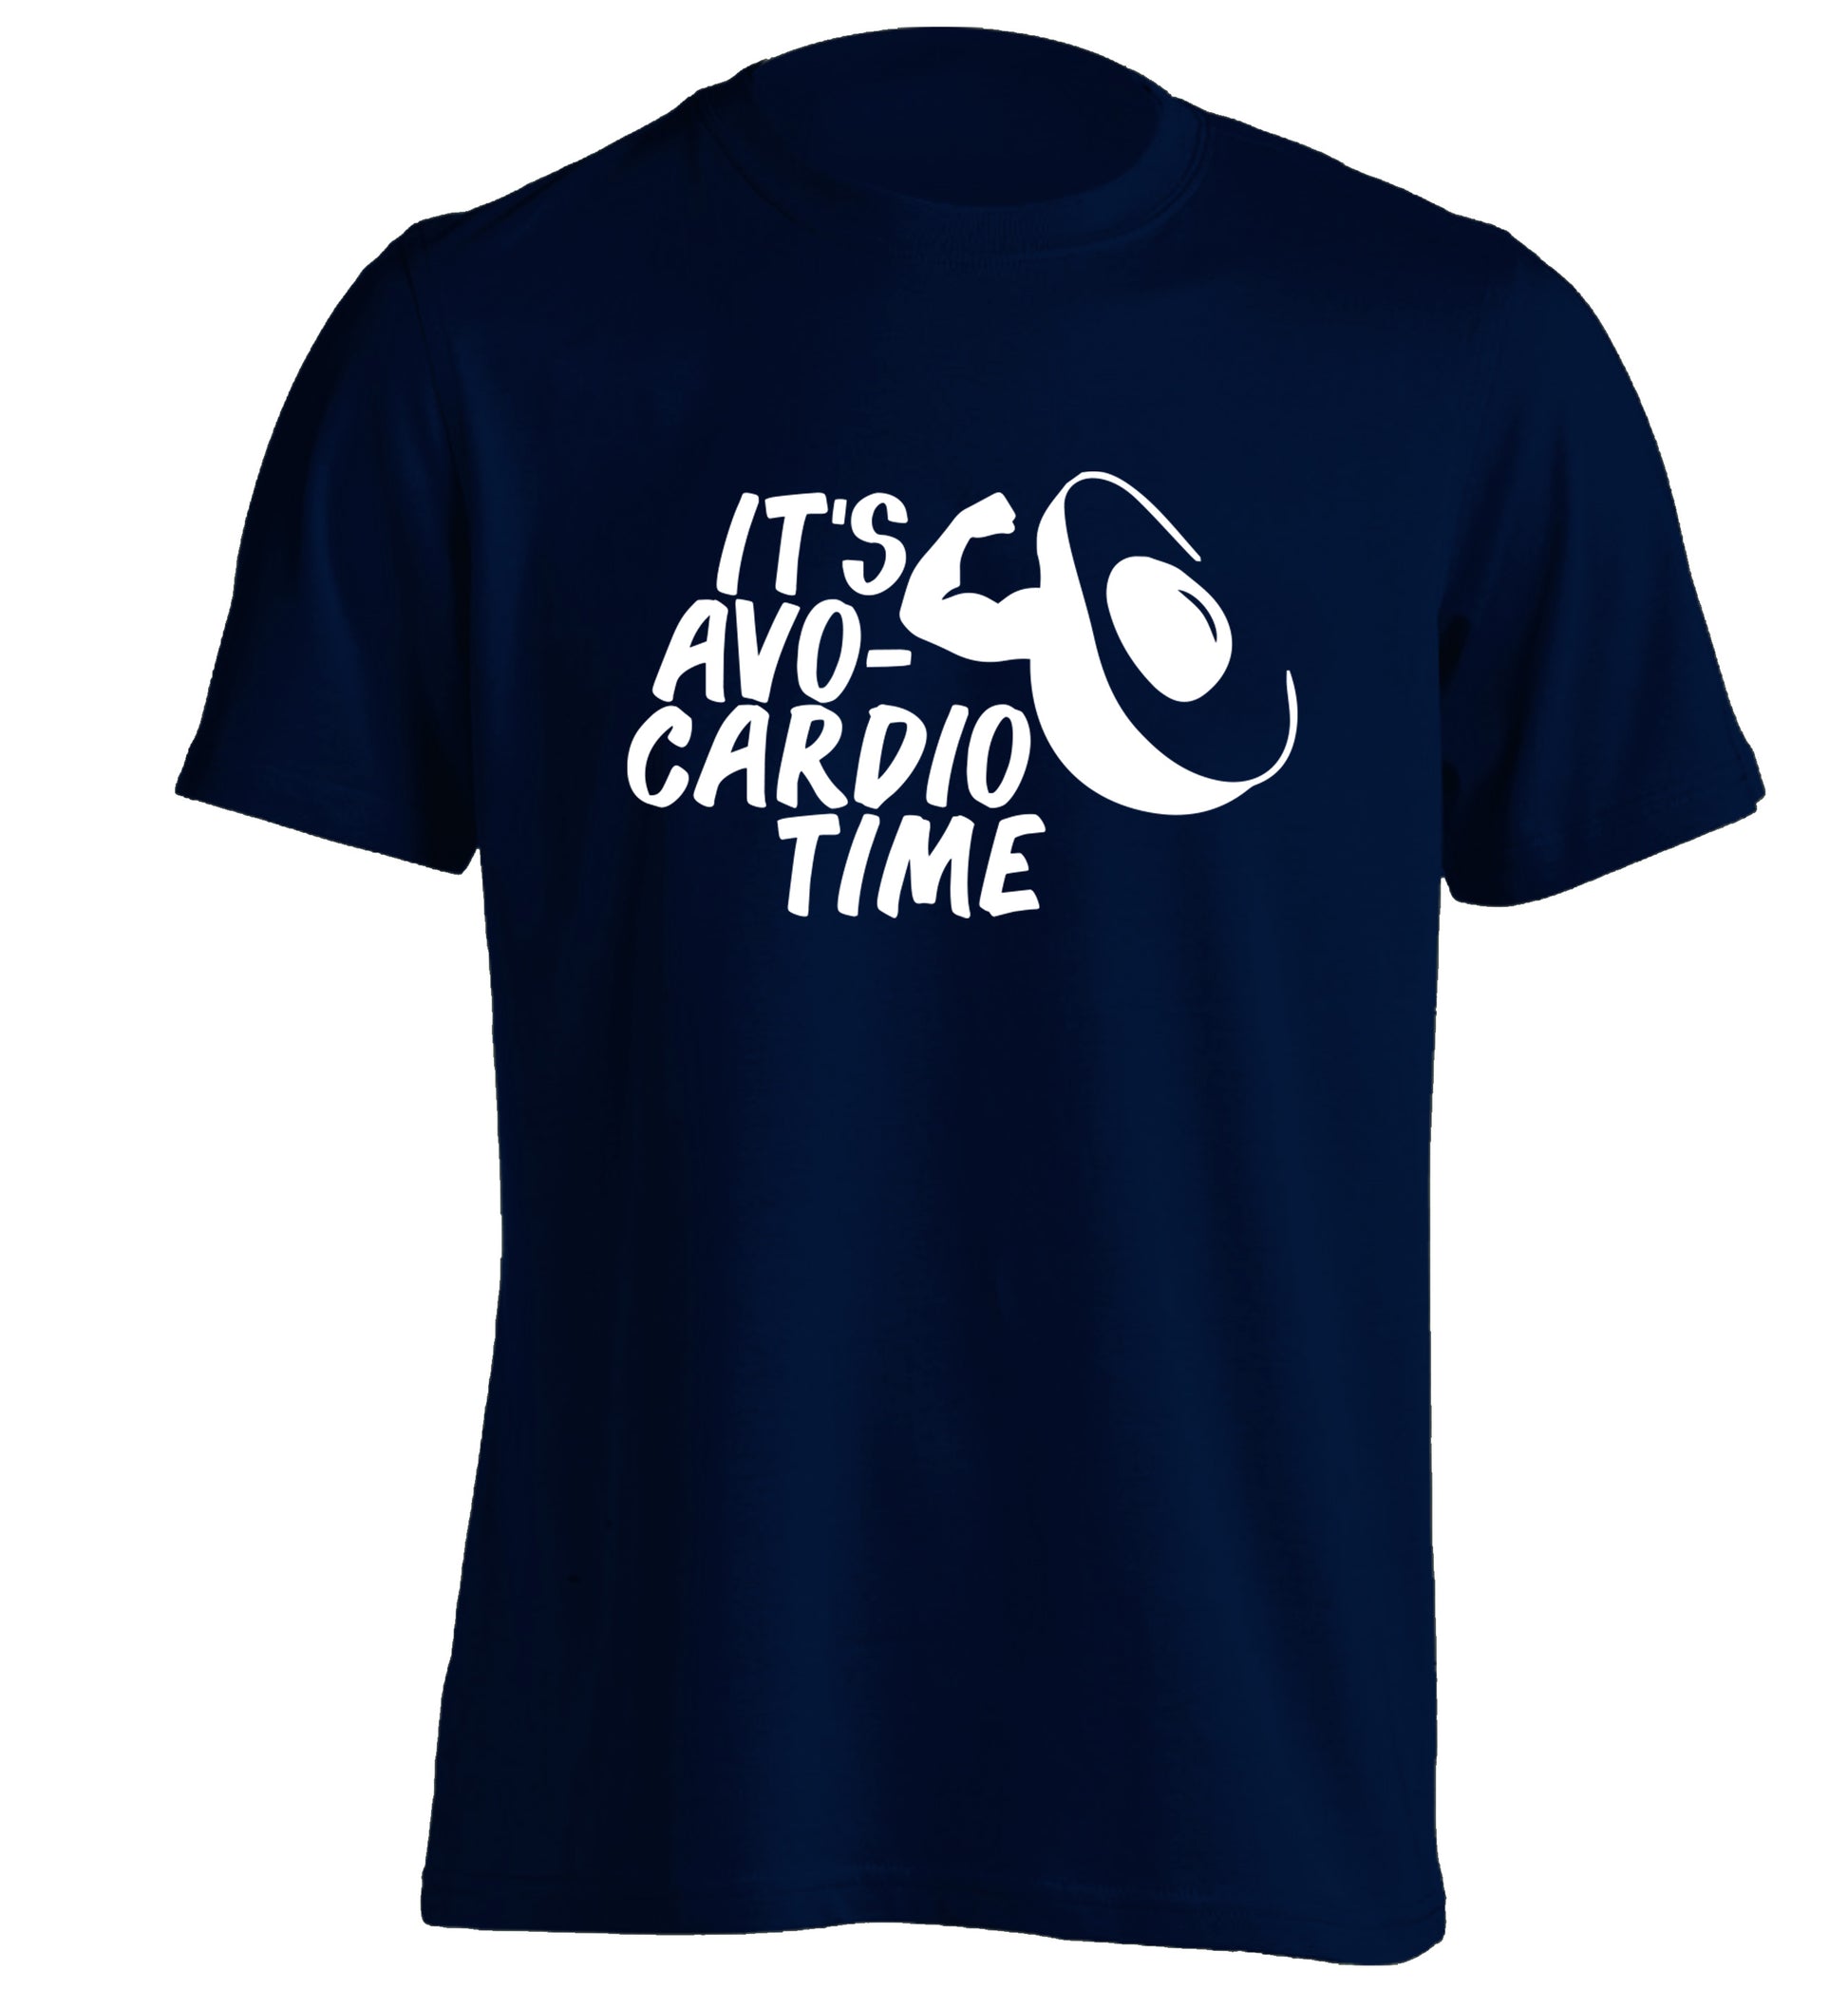 It's avo-cardio time adults unisex navy Tshirt 2XL